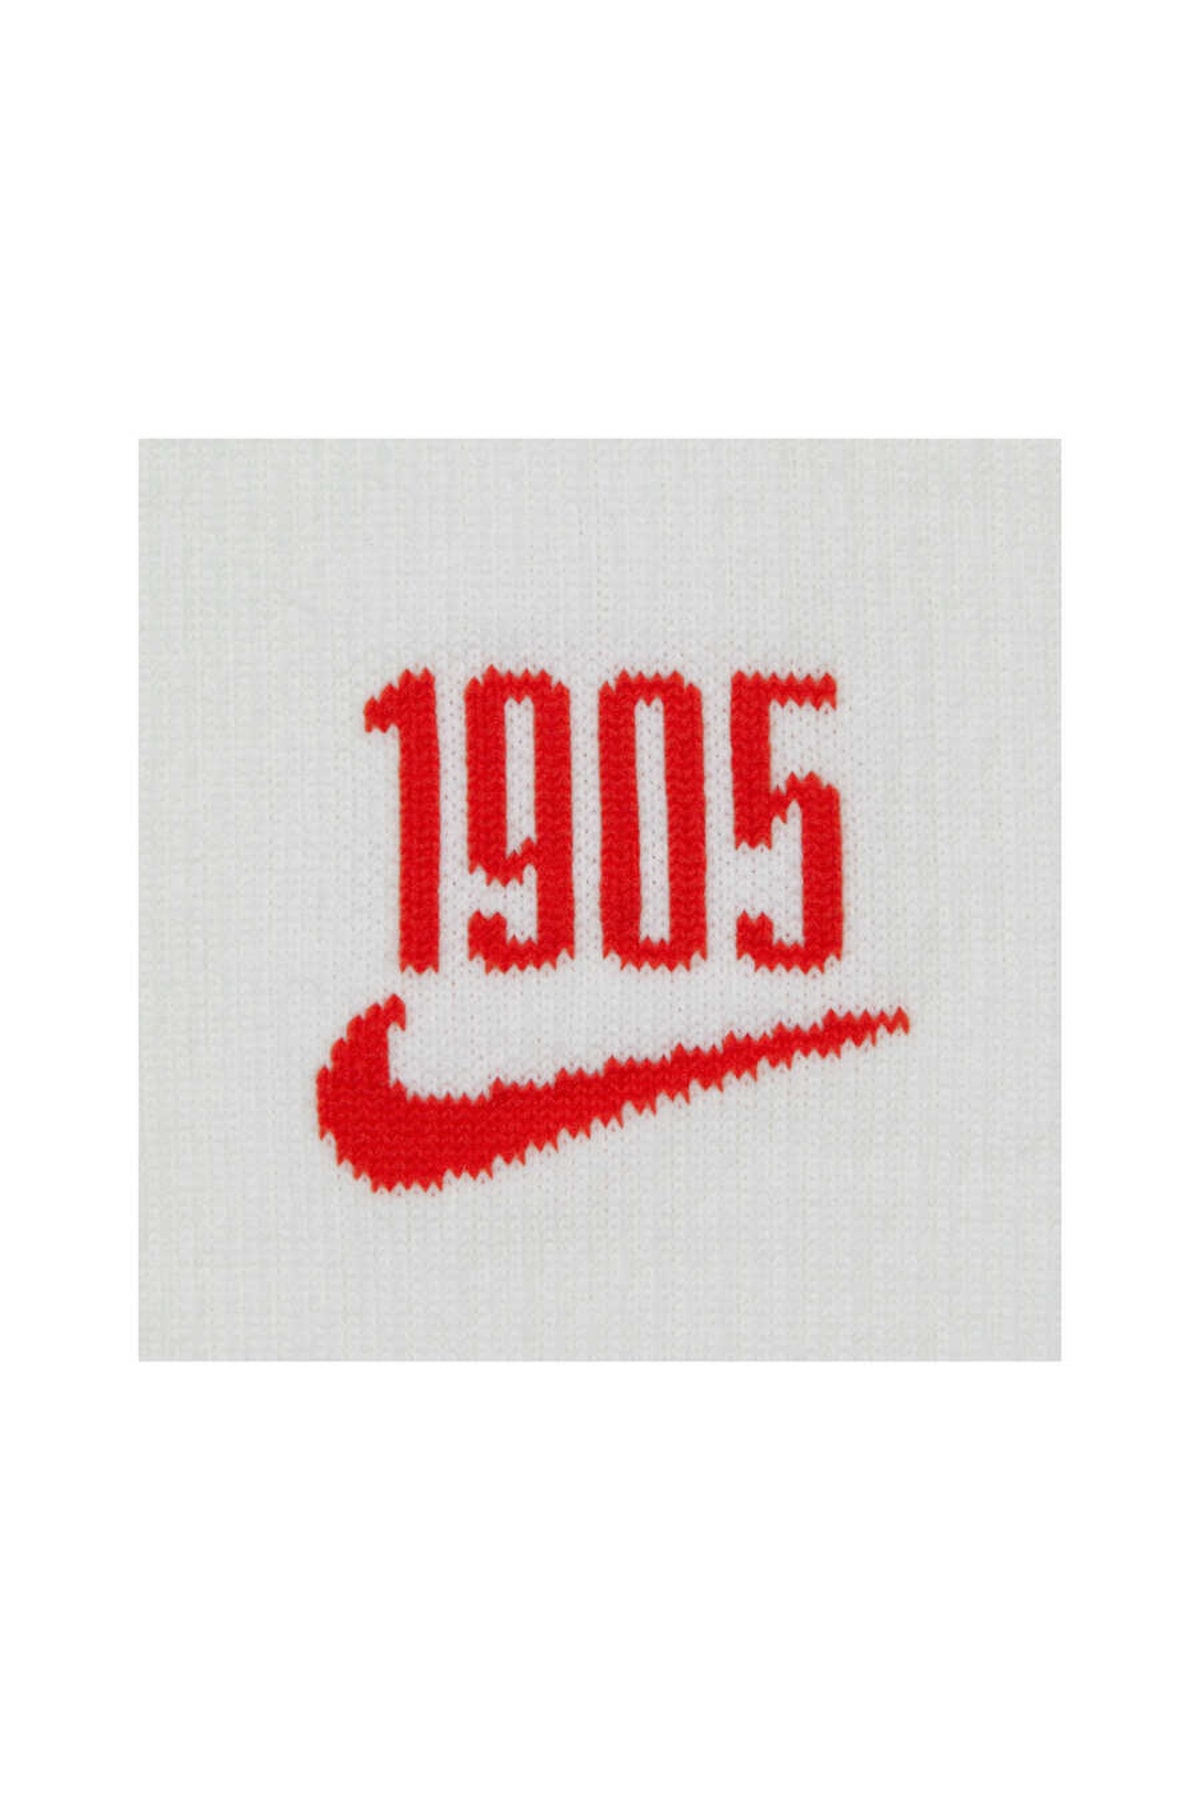 Nike Galatasaray 1905 Temalı Futbolcu Çorabı Dd8740-133 ON7886